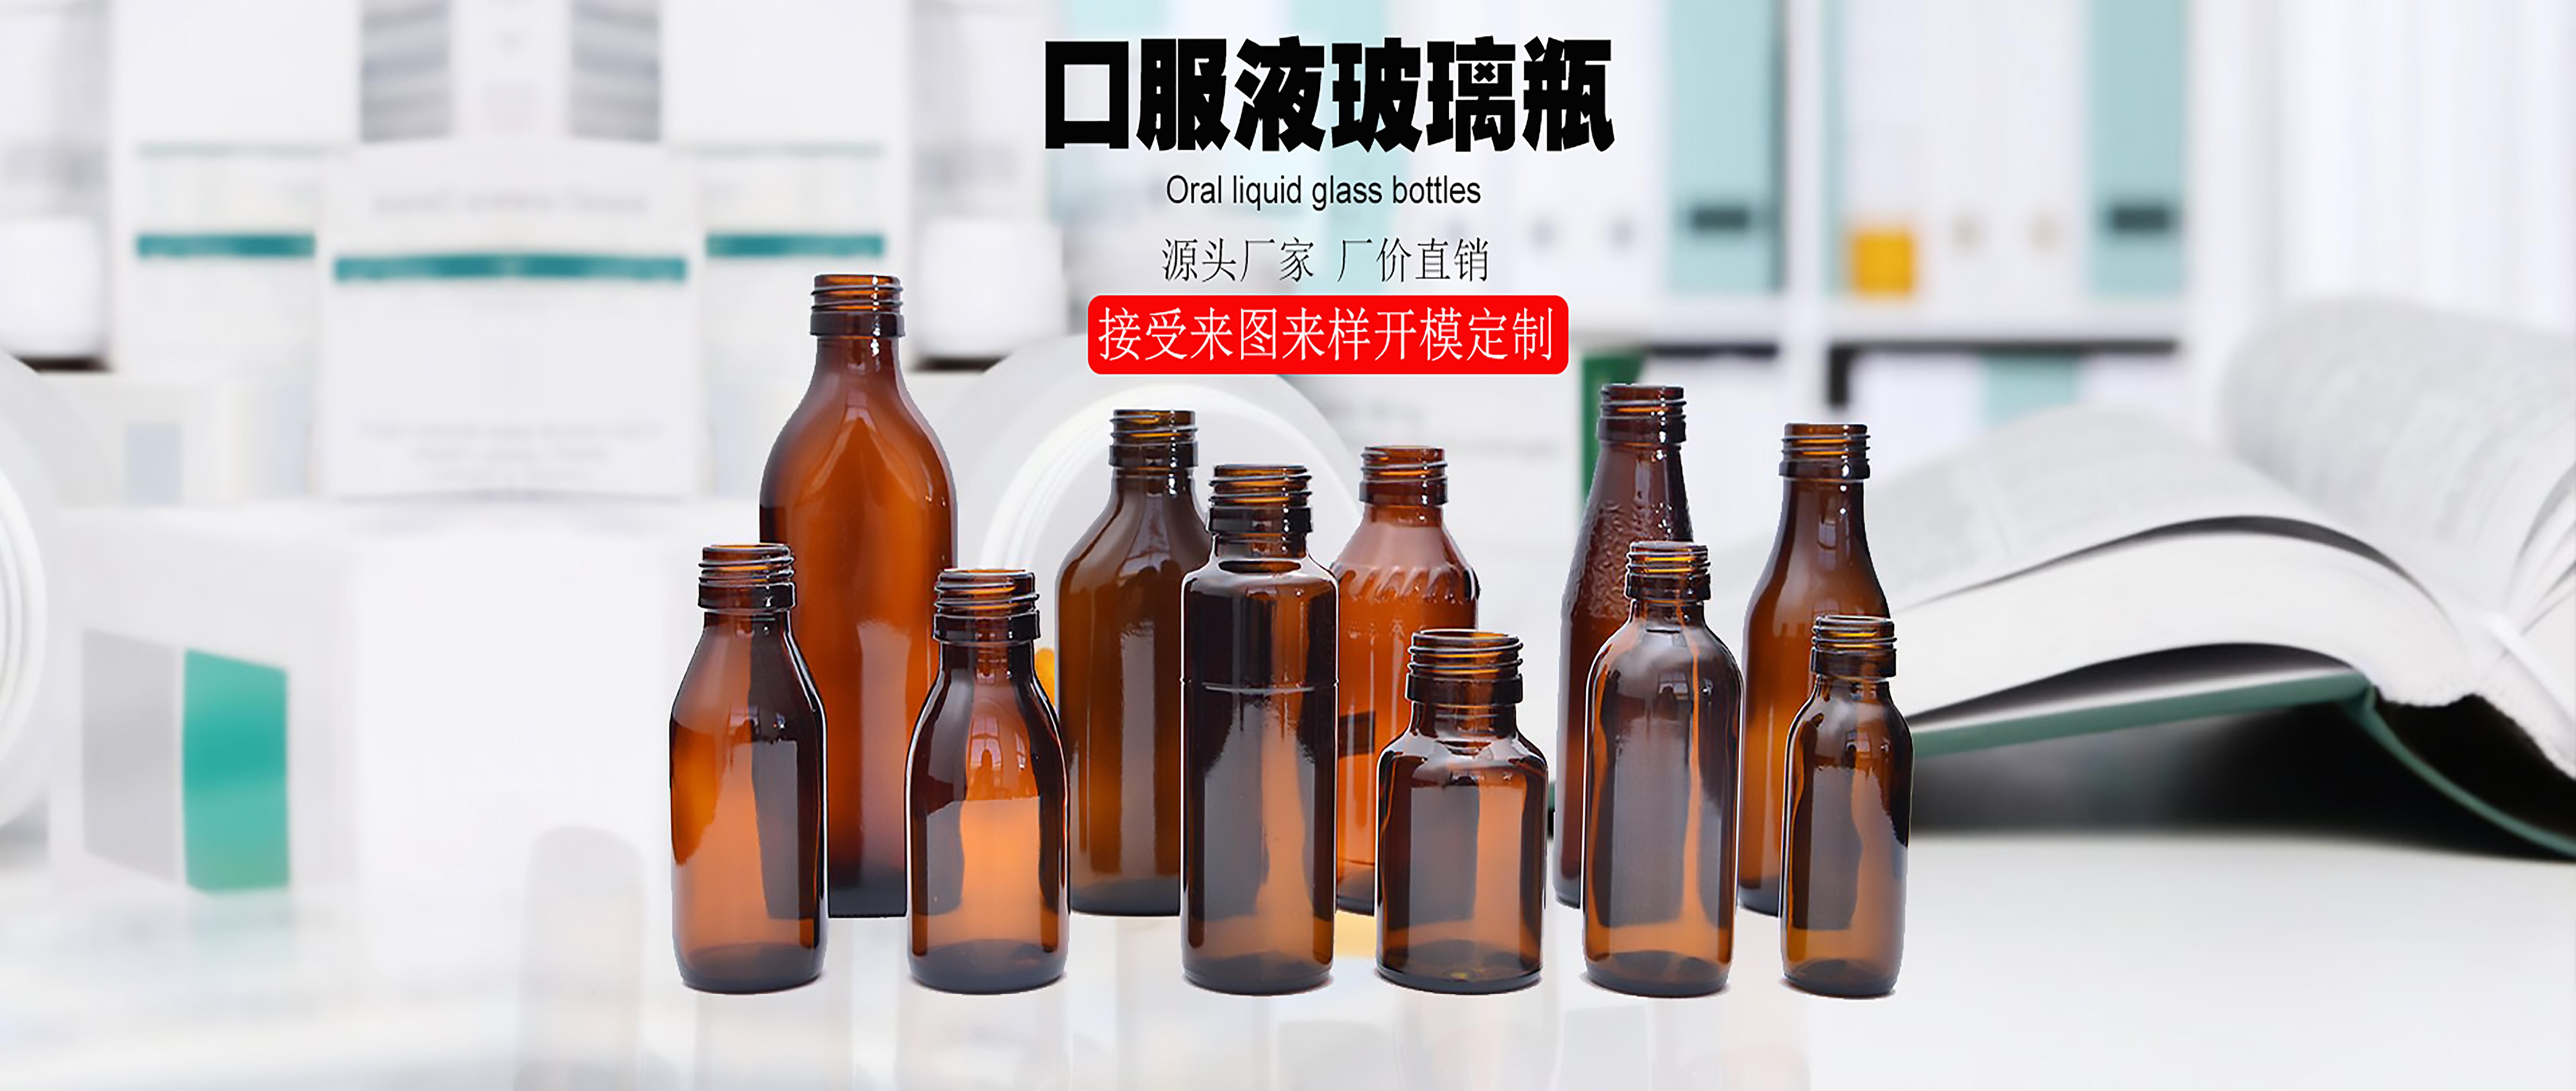 Oral liquid glass bottles